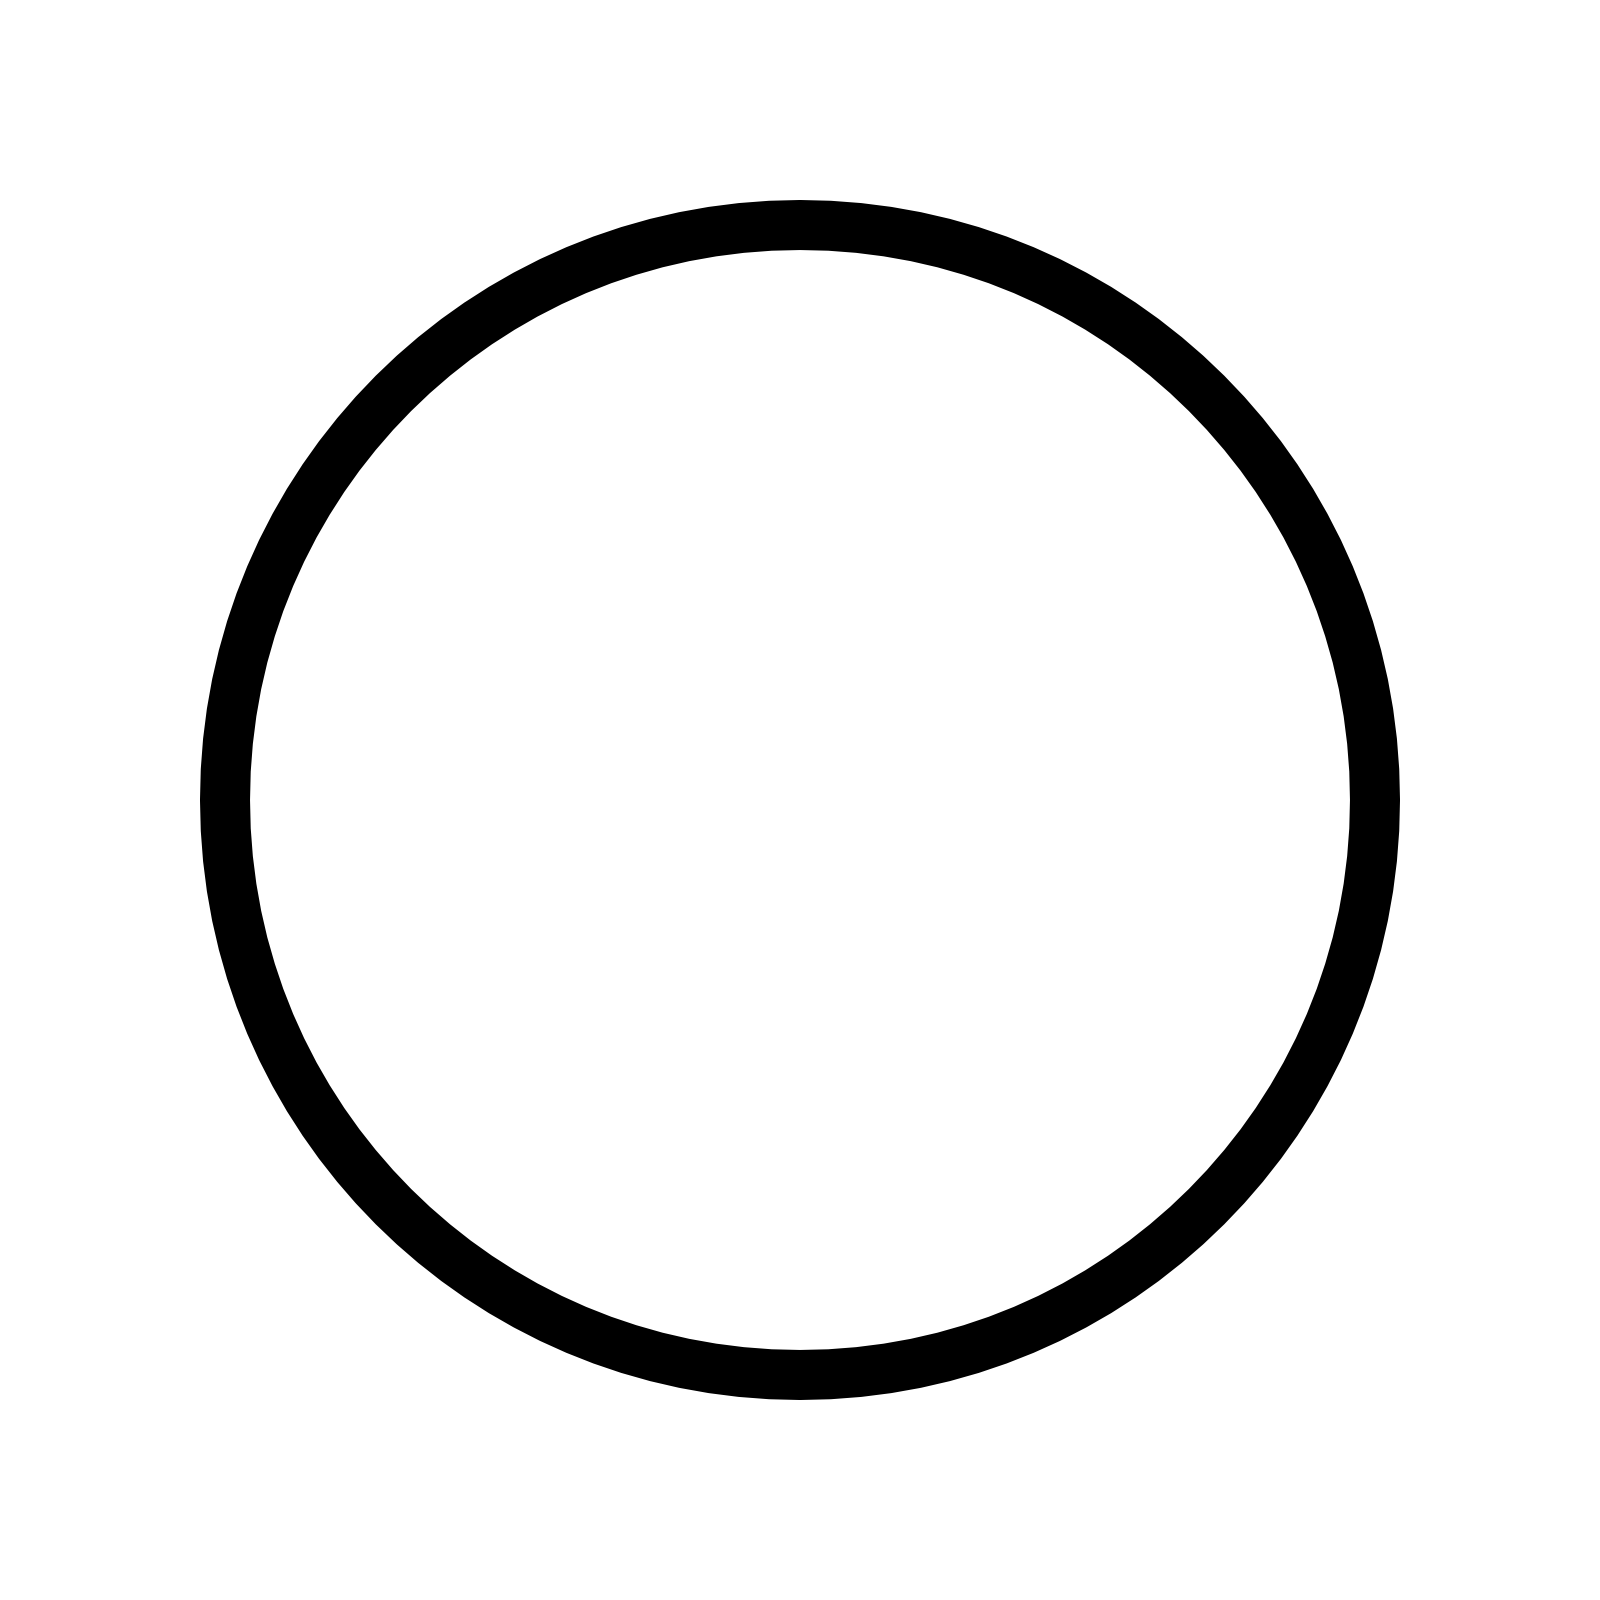 Square Area Black Monochrome White Circle PNG Image